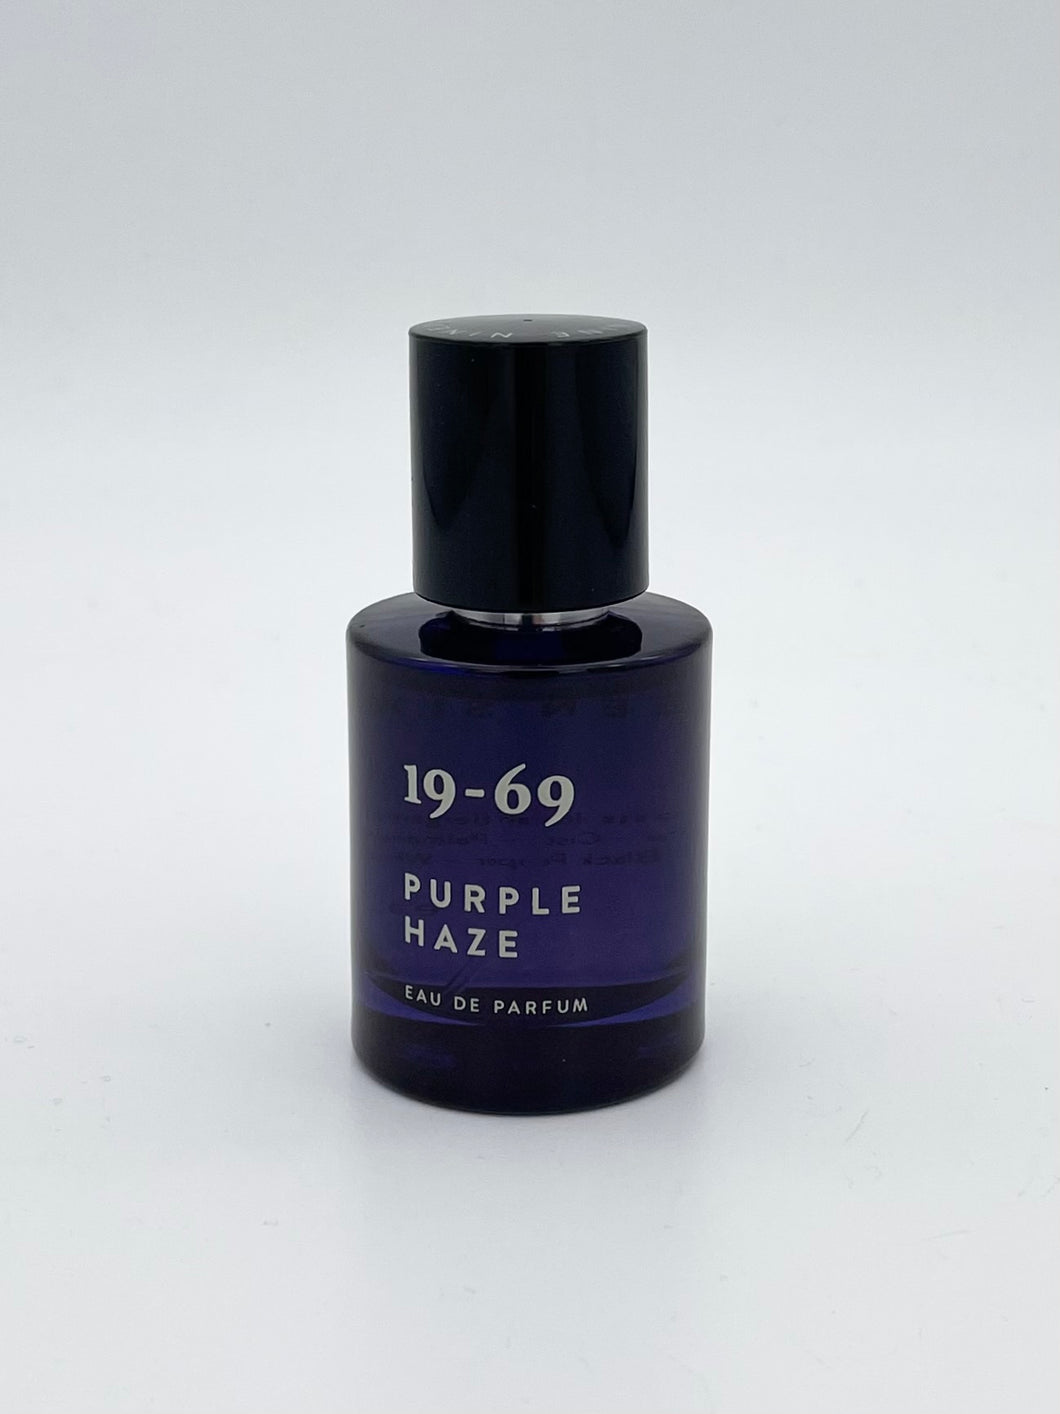 19-69 - Purple Haze